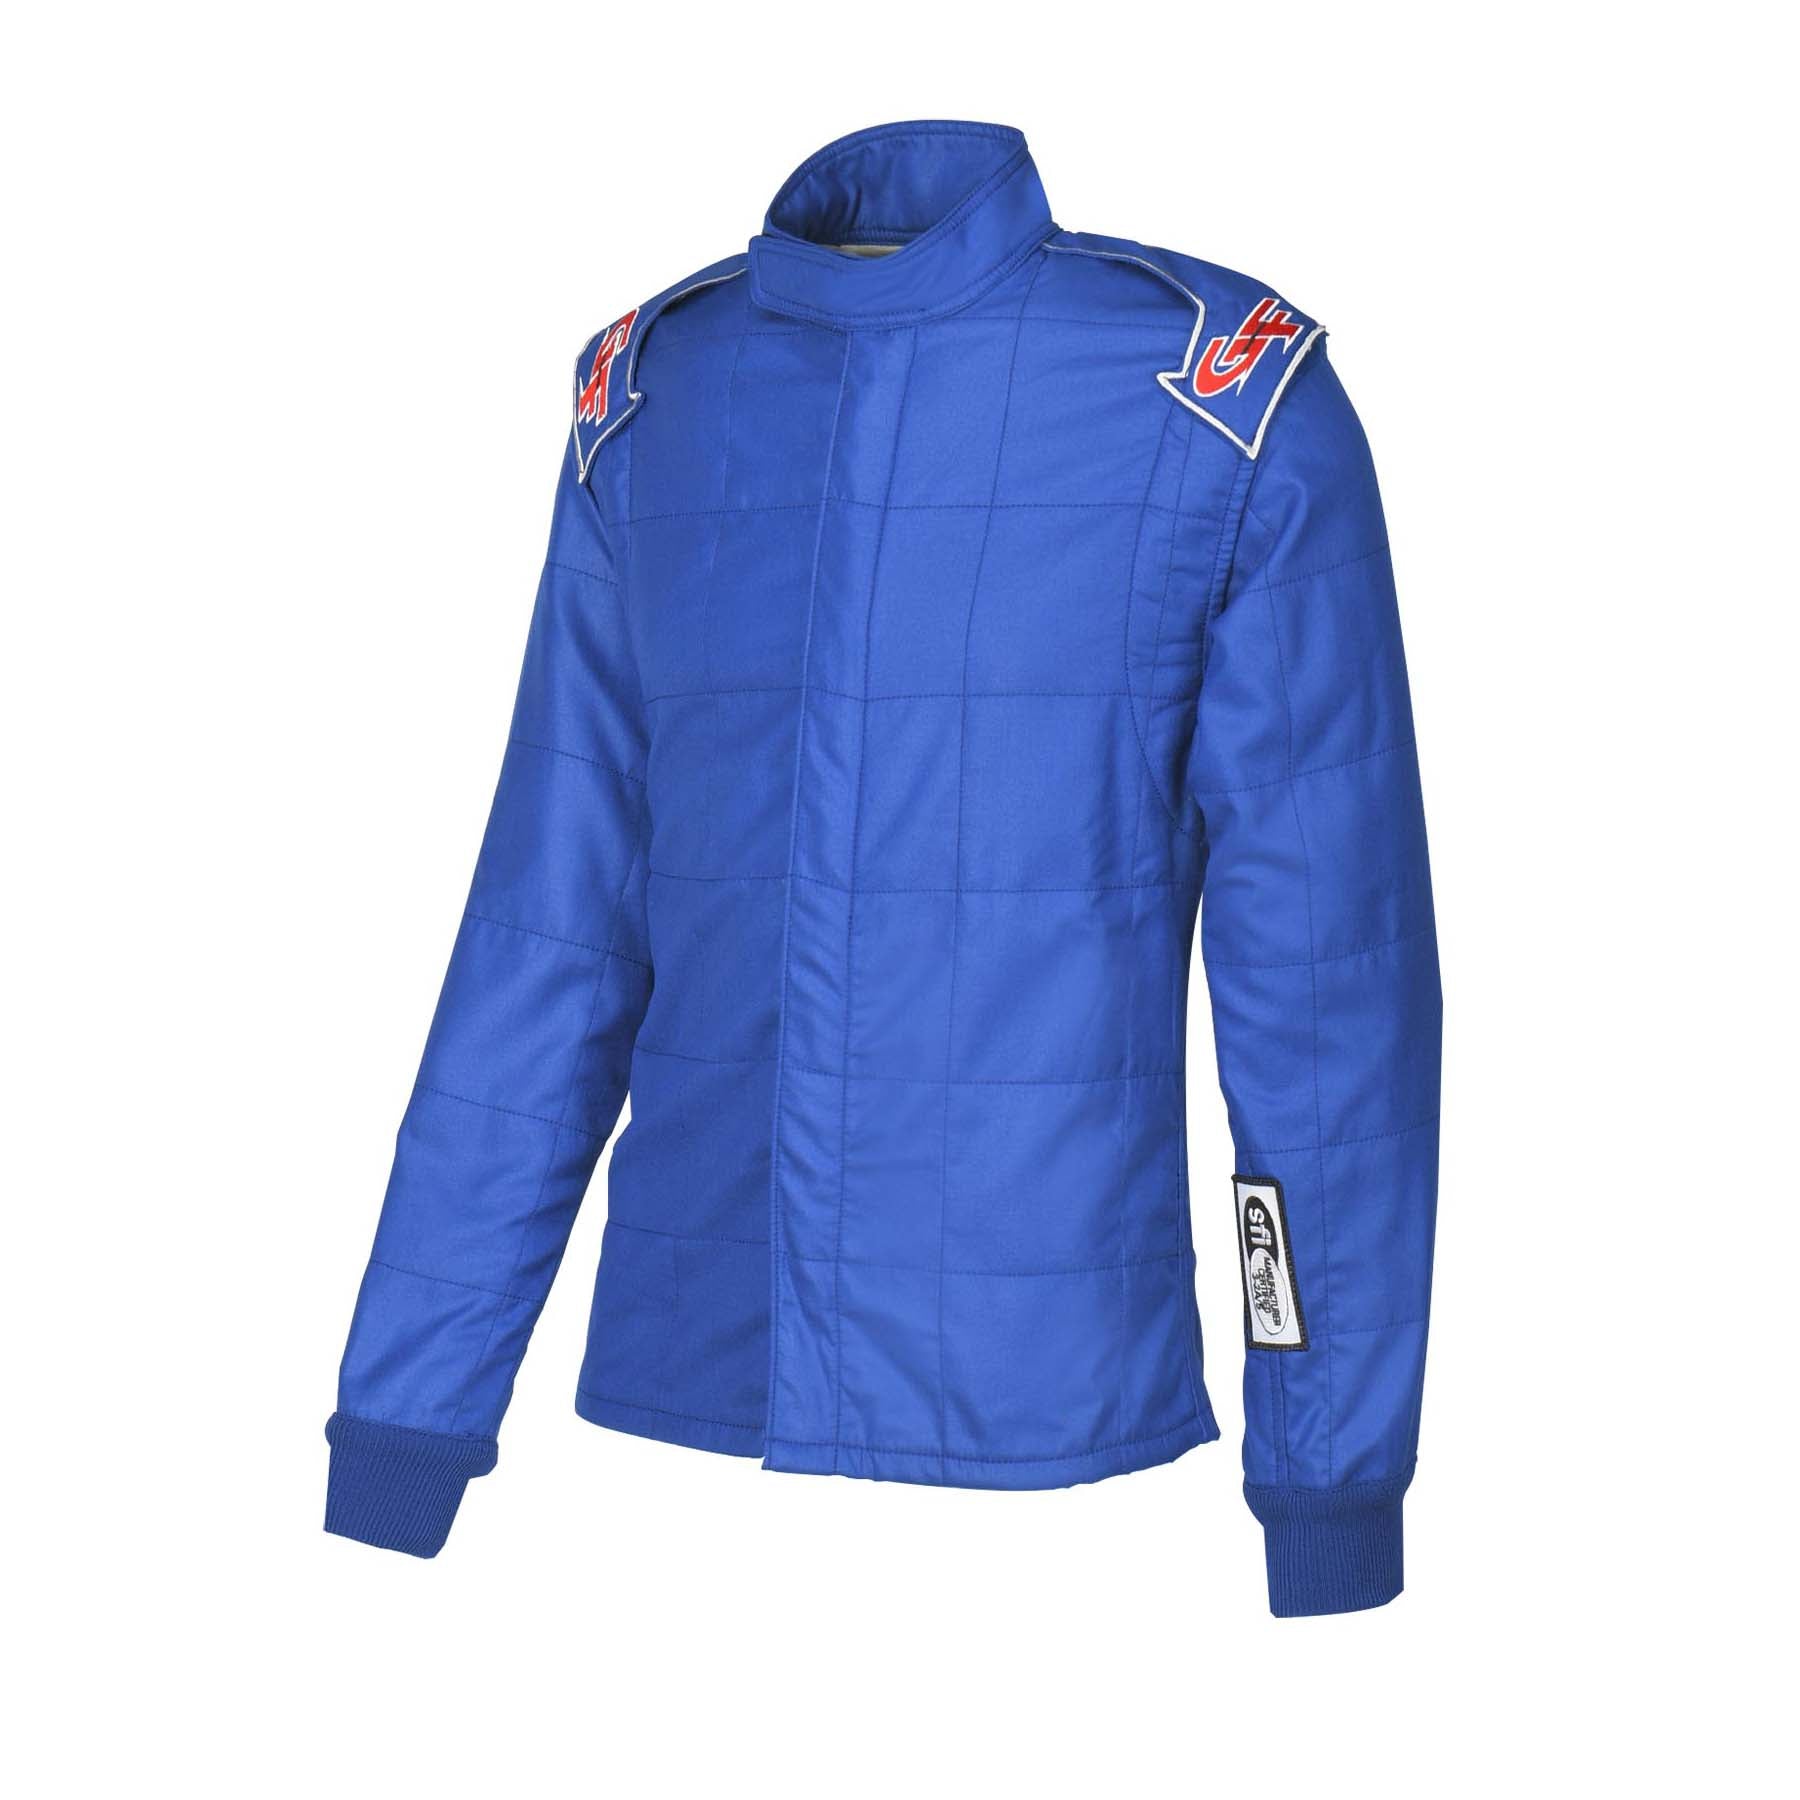 G-Force G-Limit Racing Jacket - Blue